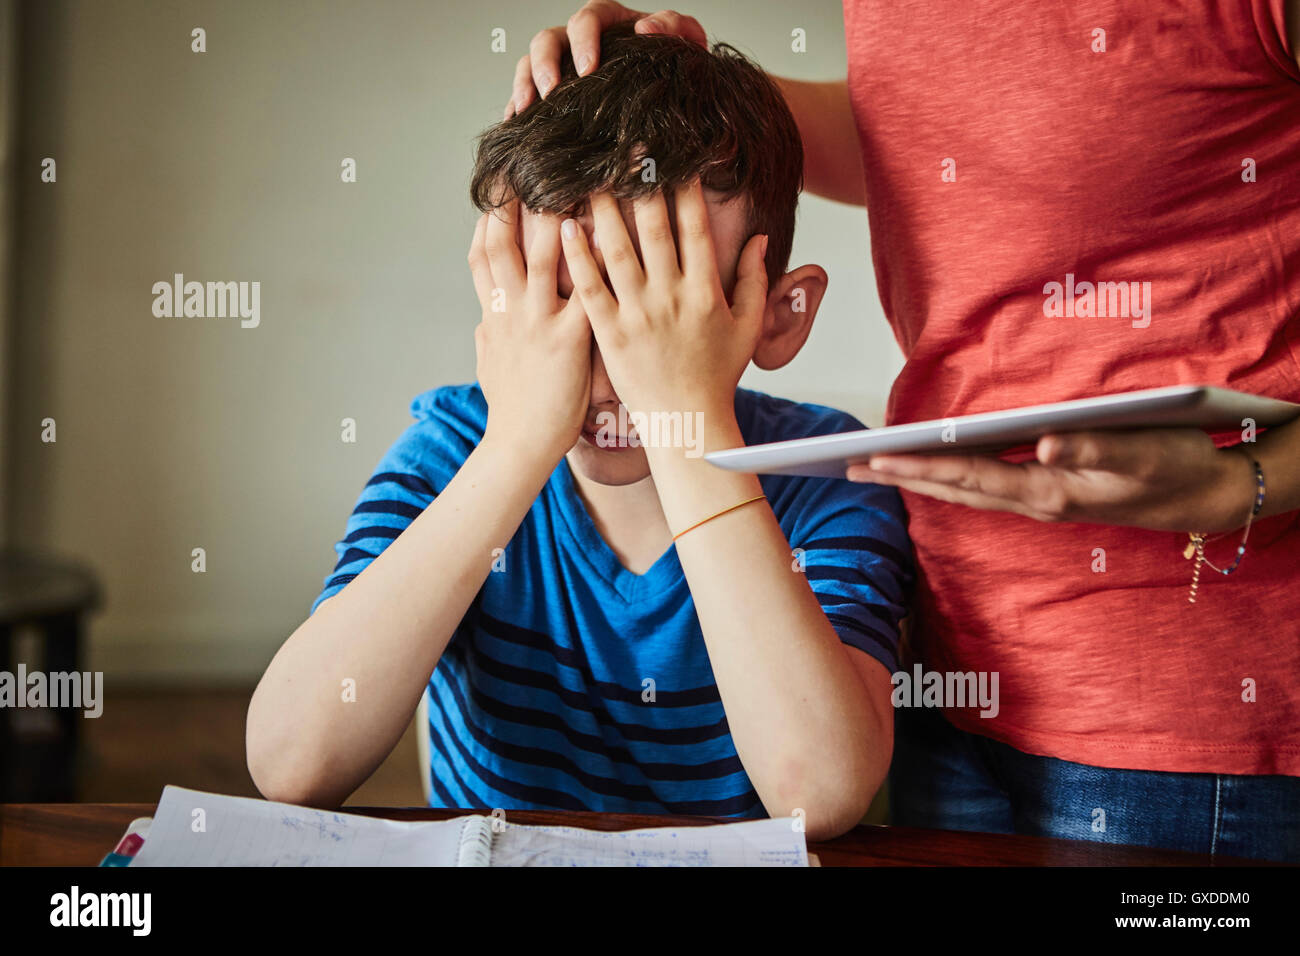 Mother comforting upset son doing homework Stock Photo